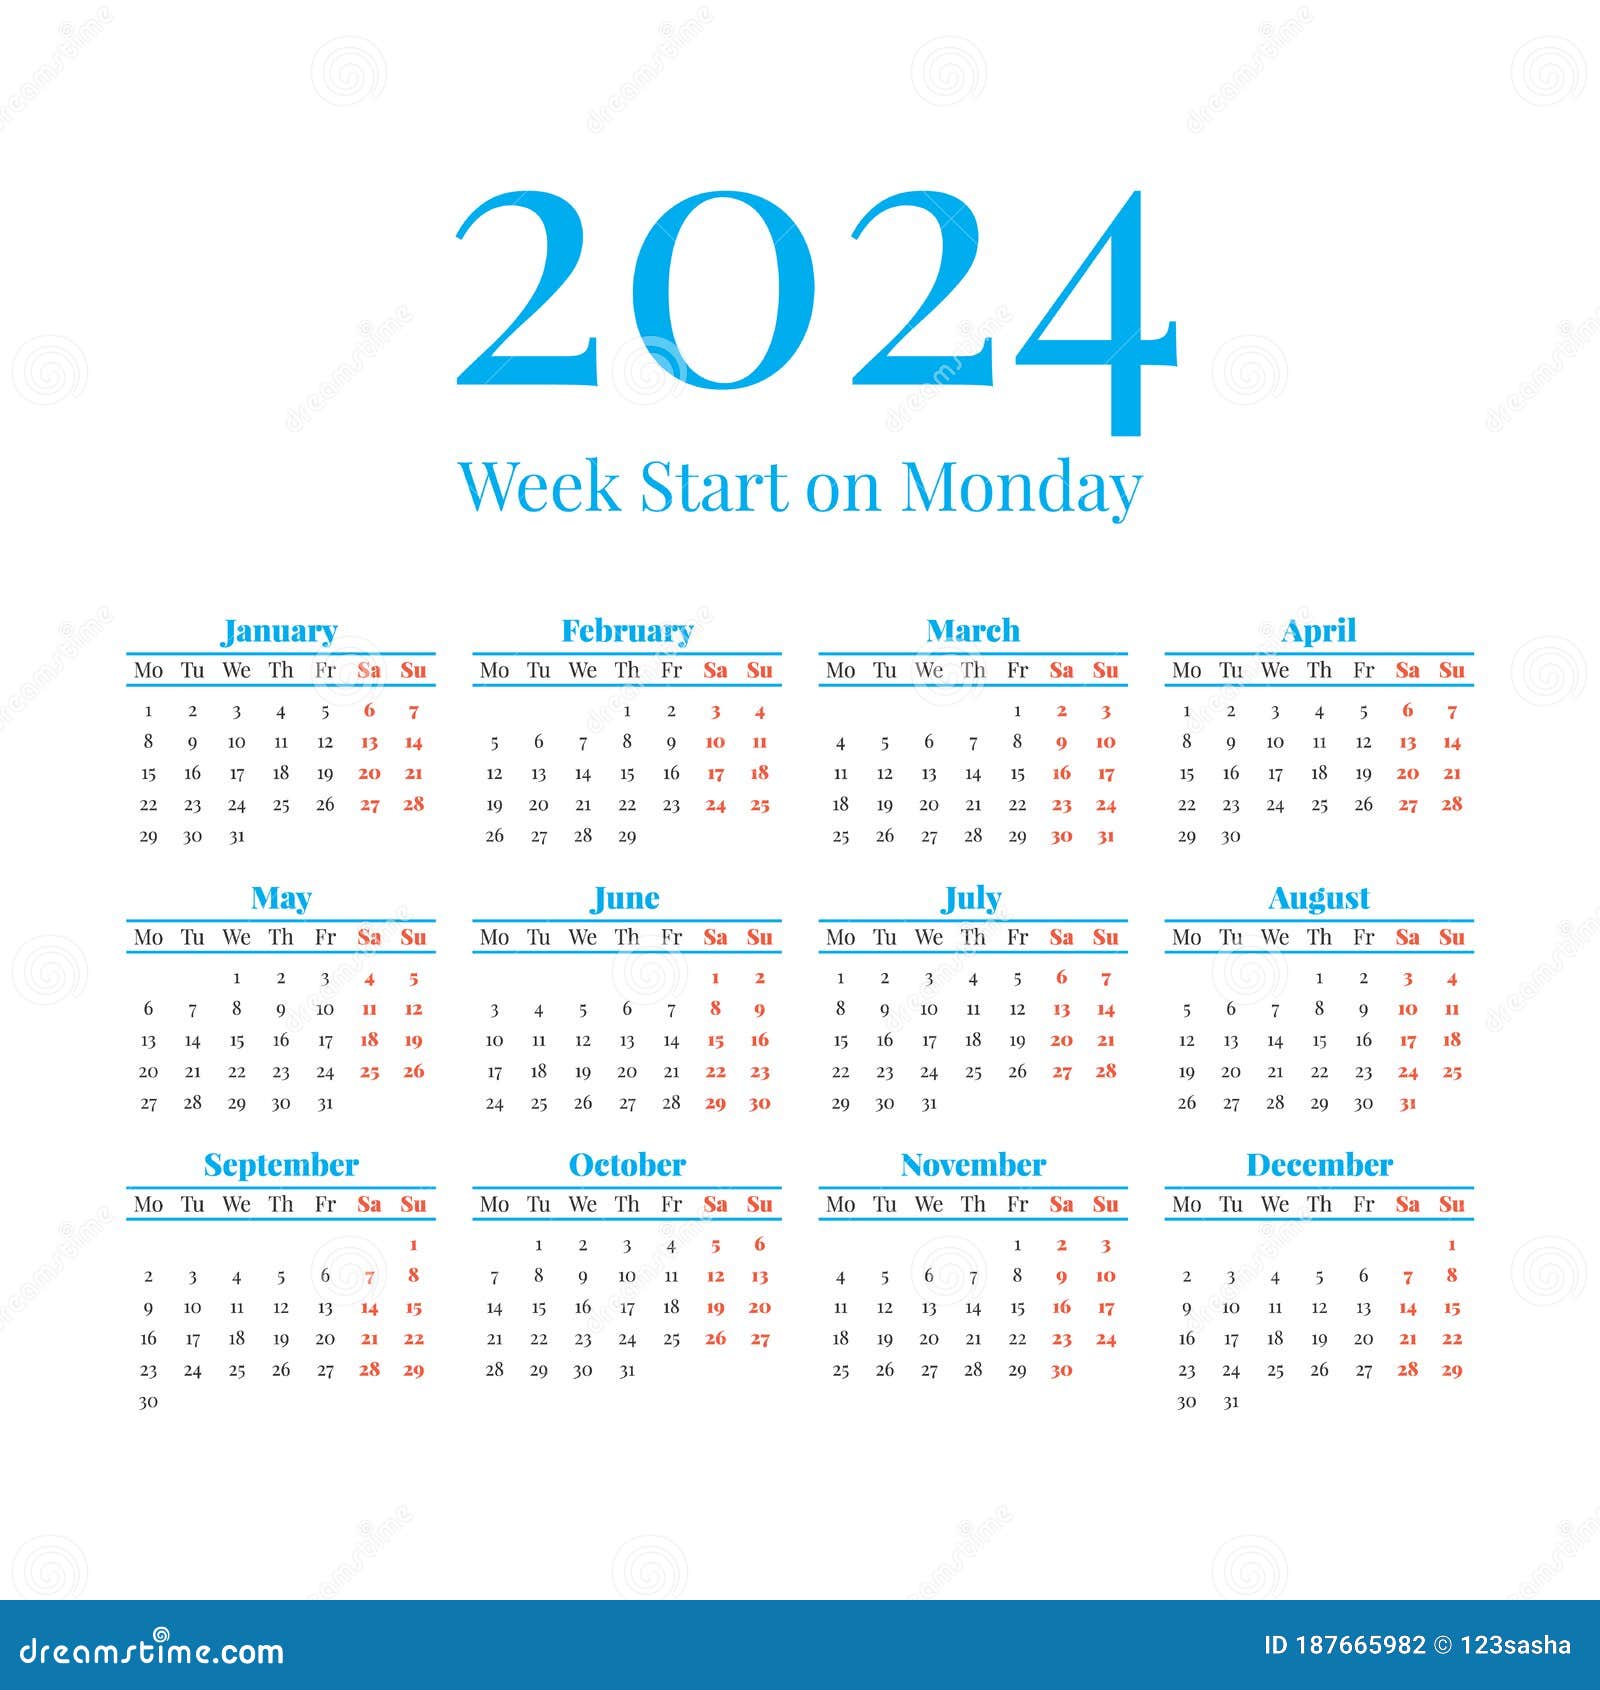 2023-calendar-excel-format-starting-monday-latest-calendar-template-riset